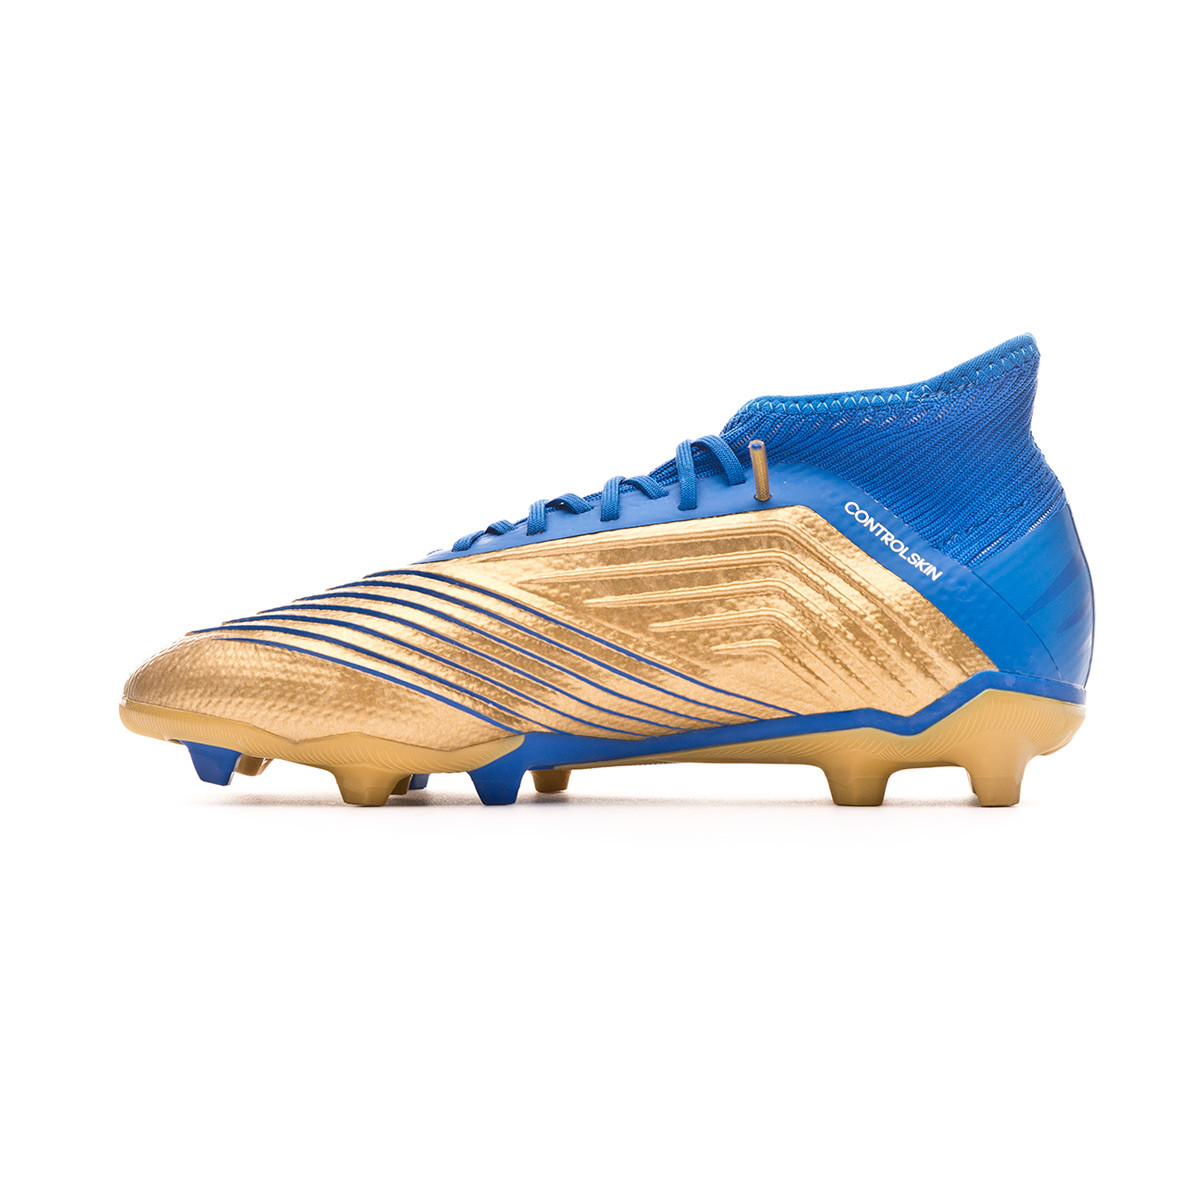 adidas gold football boots